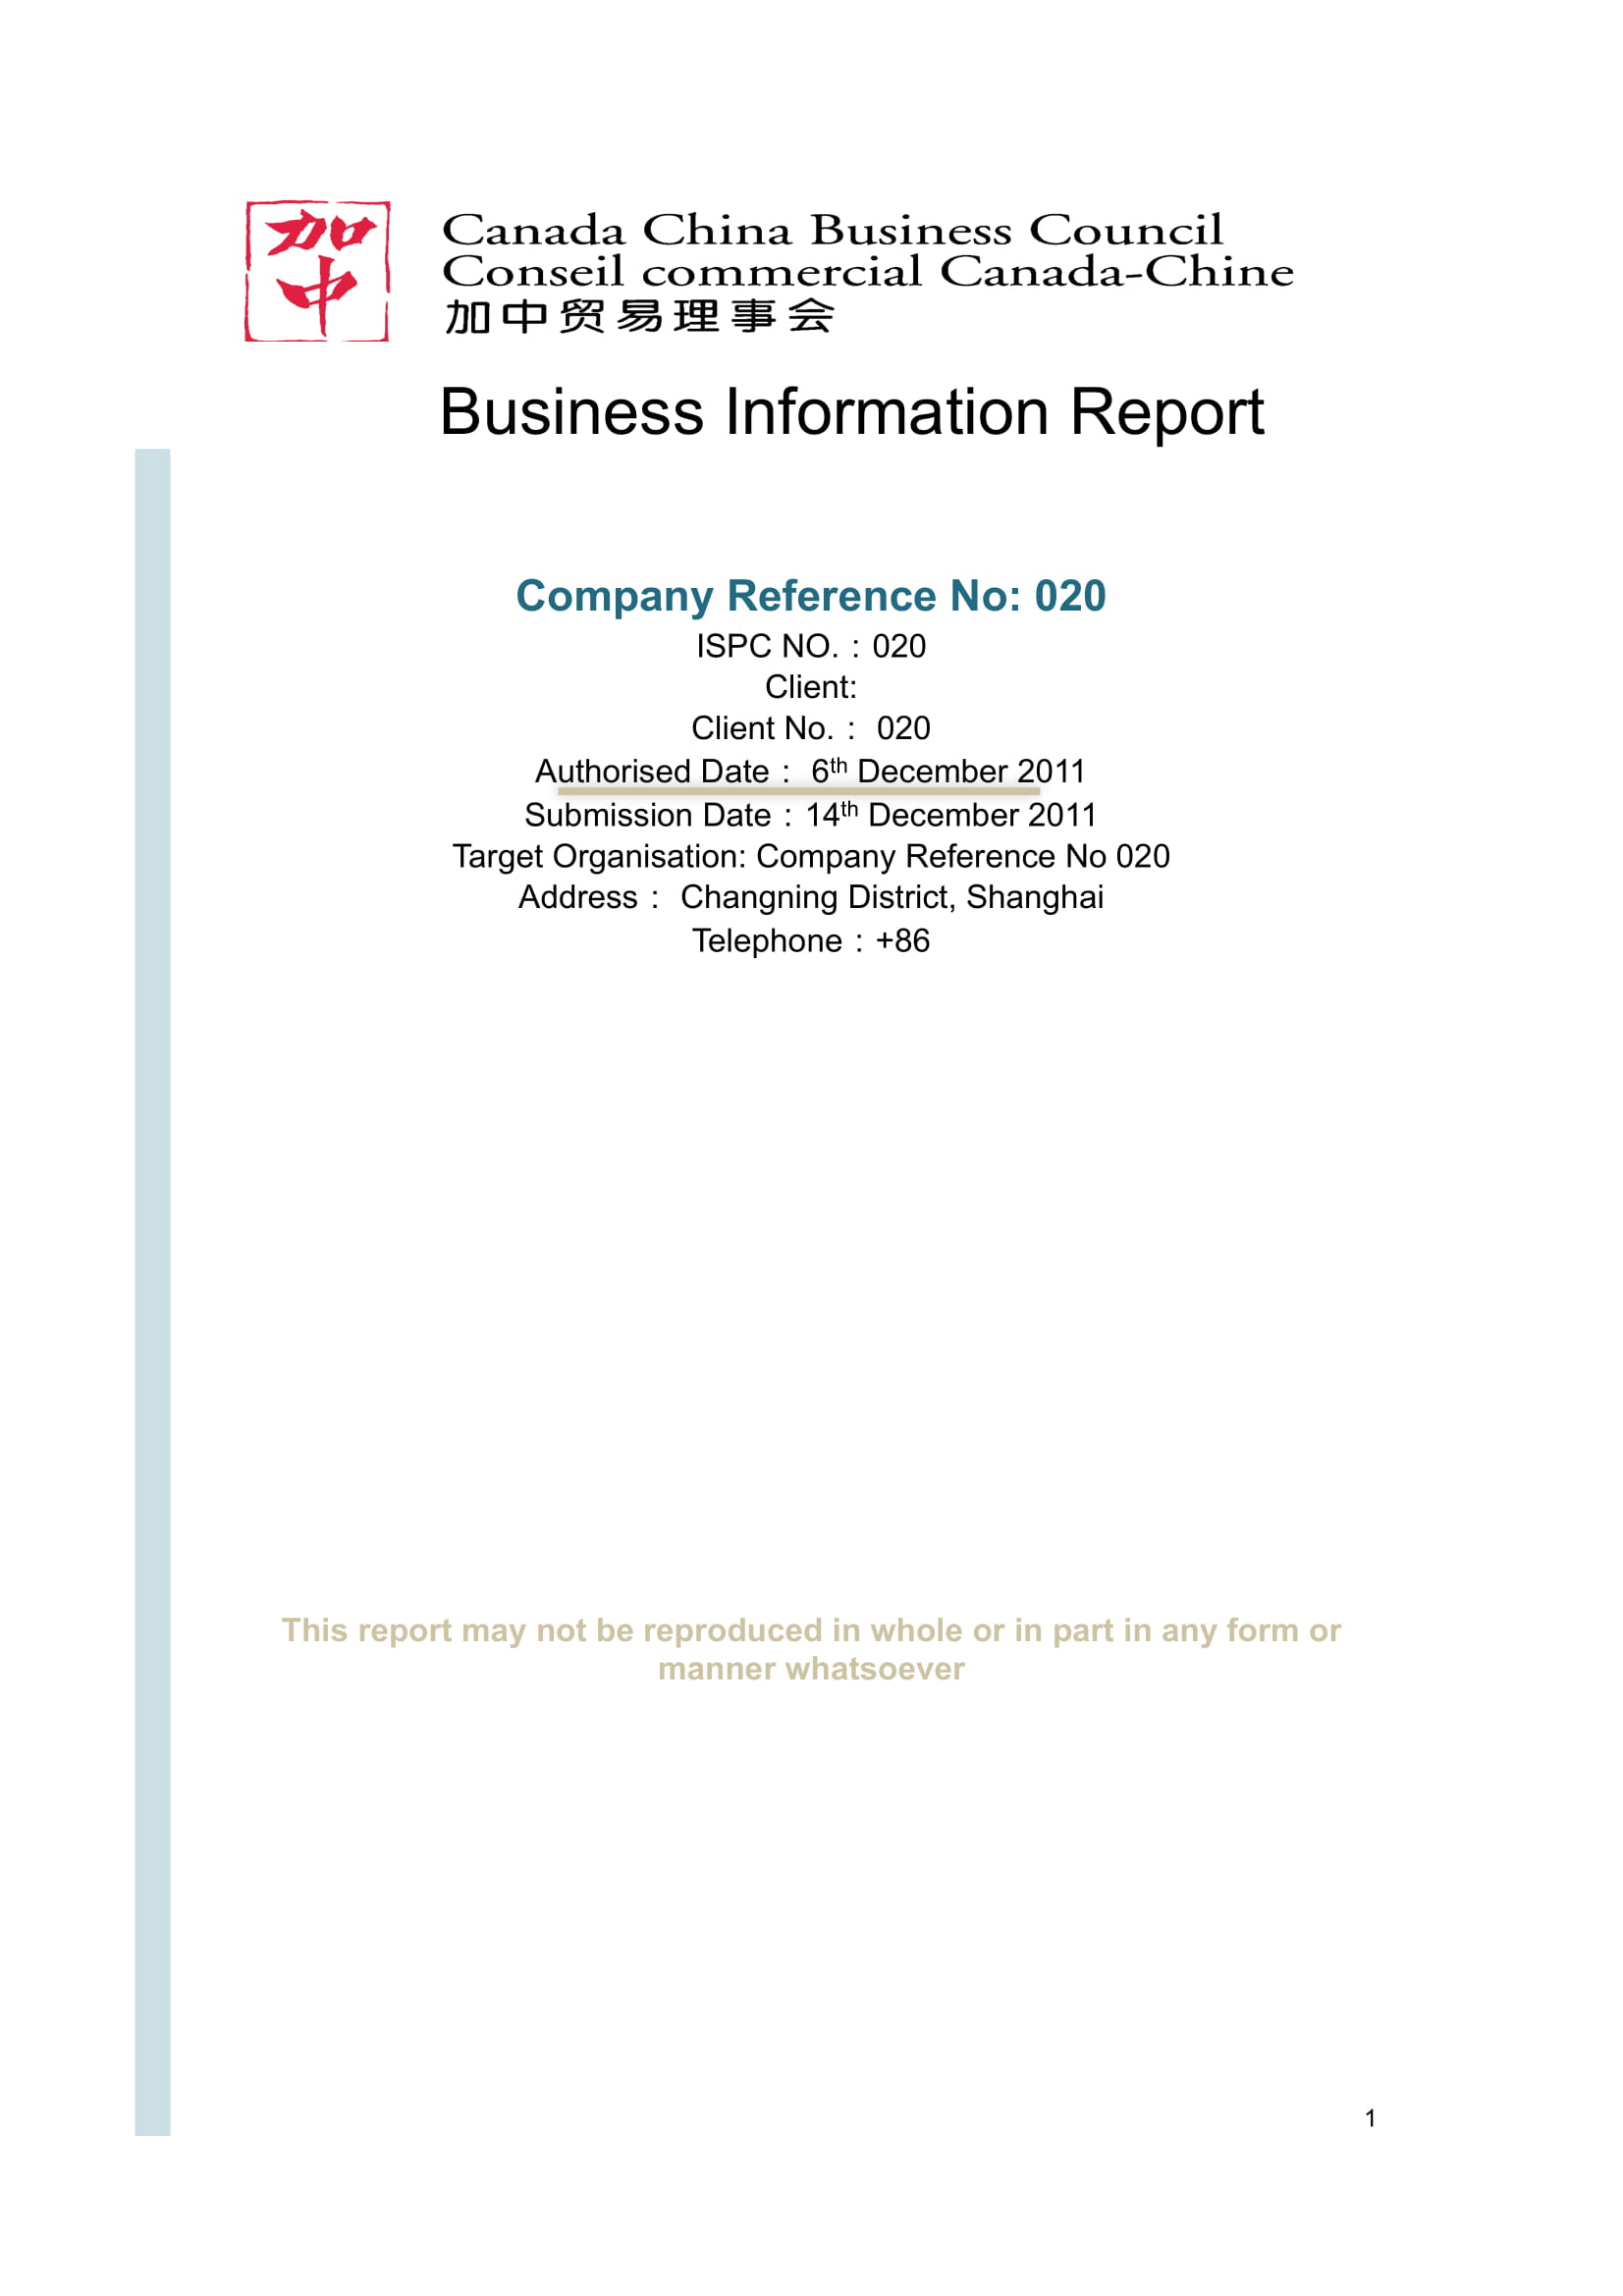 informational report example